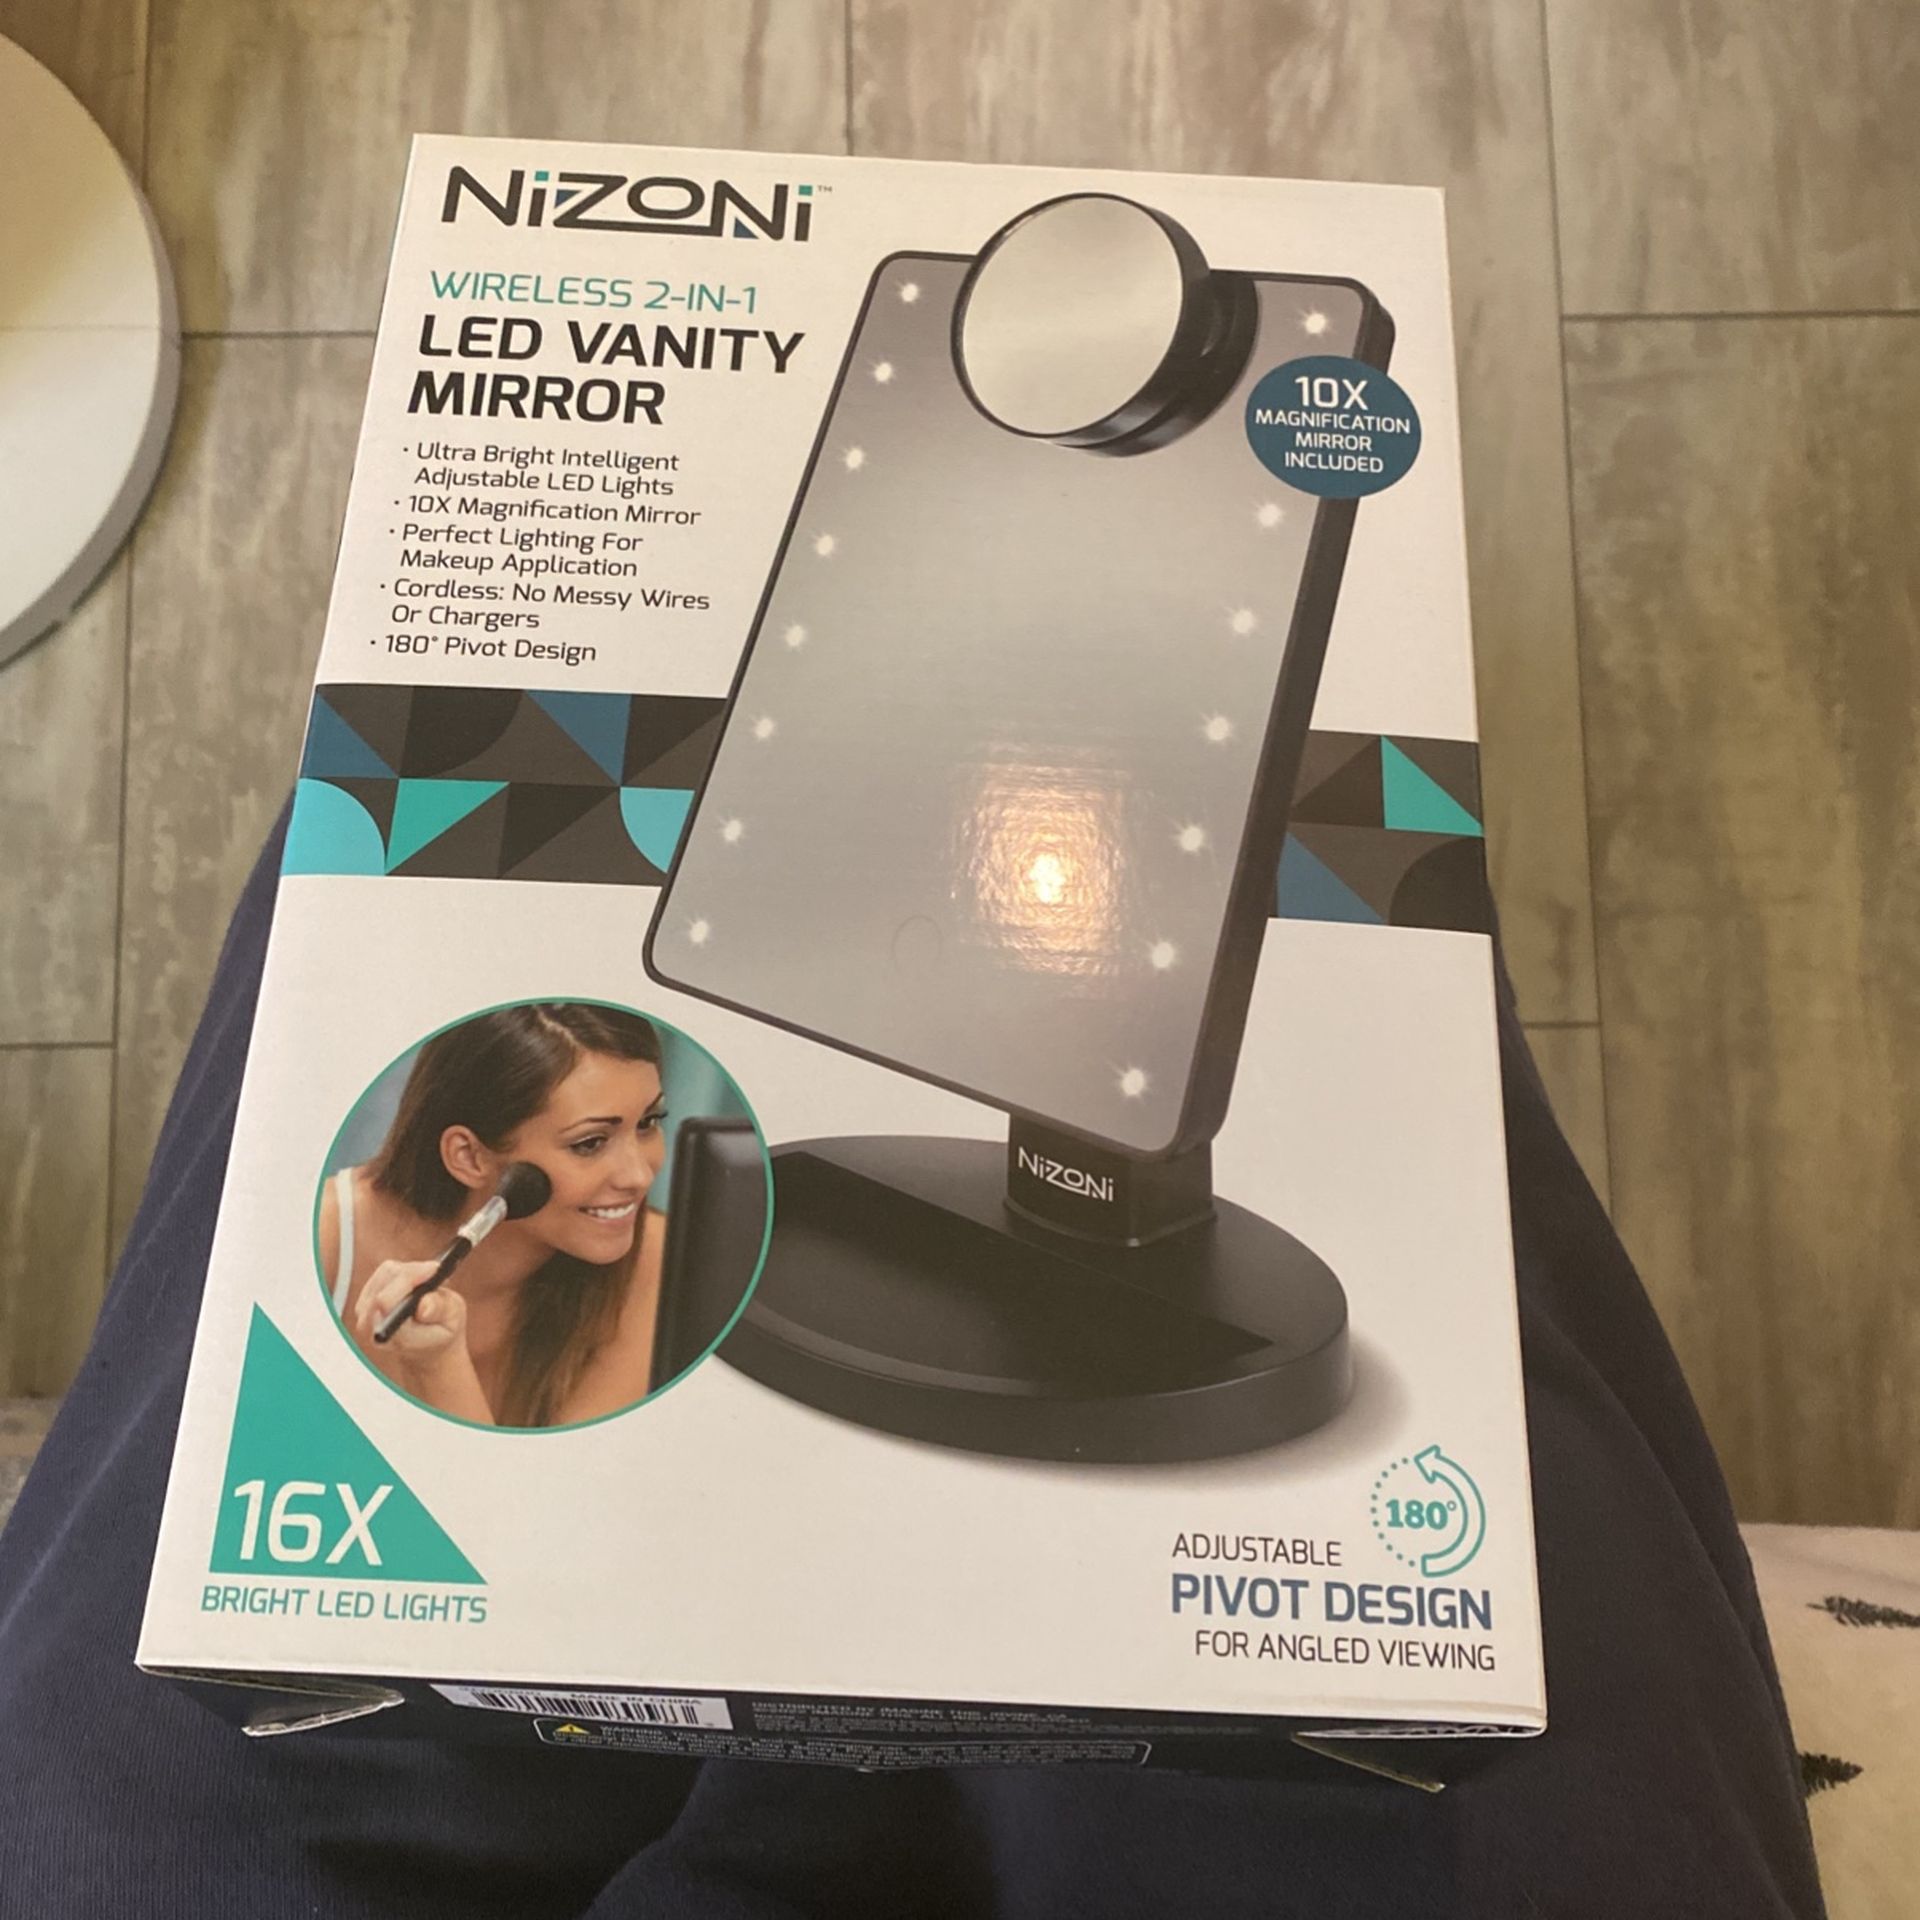 Nizoni Wireless 2 in 1 Led Vanity Mirror 